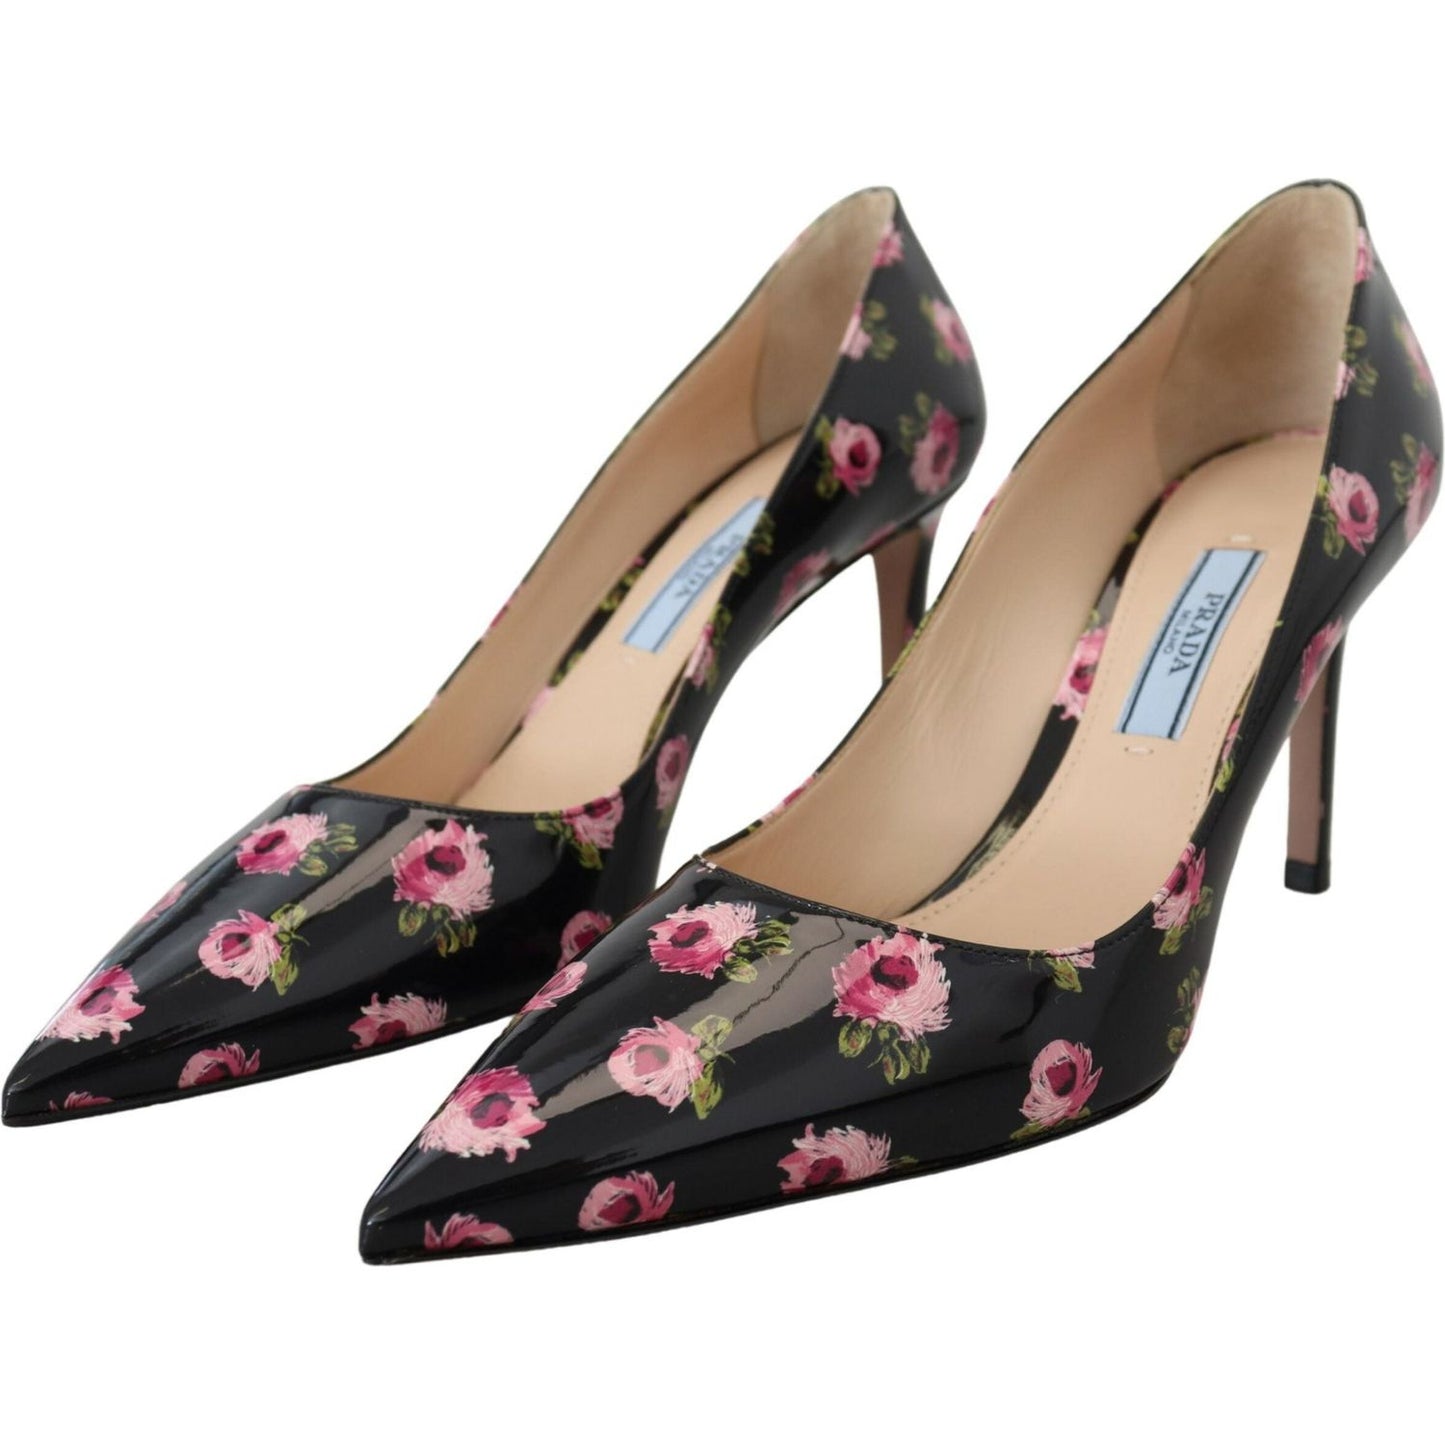 Prada Elegant Floral Print Leather Pumps black-leather-floral-heels-stilettos-pumps IMG_8306-scaled-0721a60e-5e9.jpg